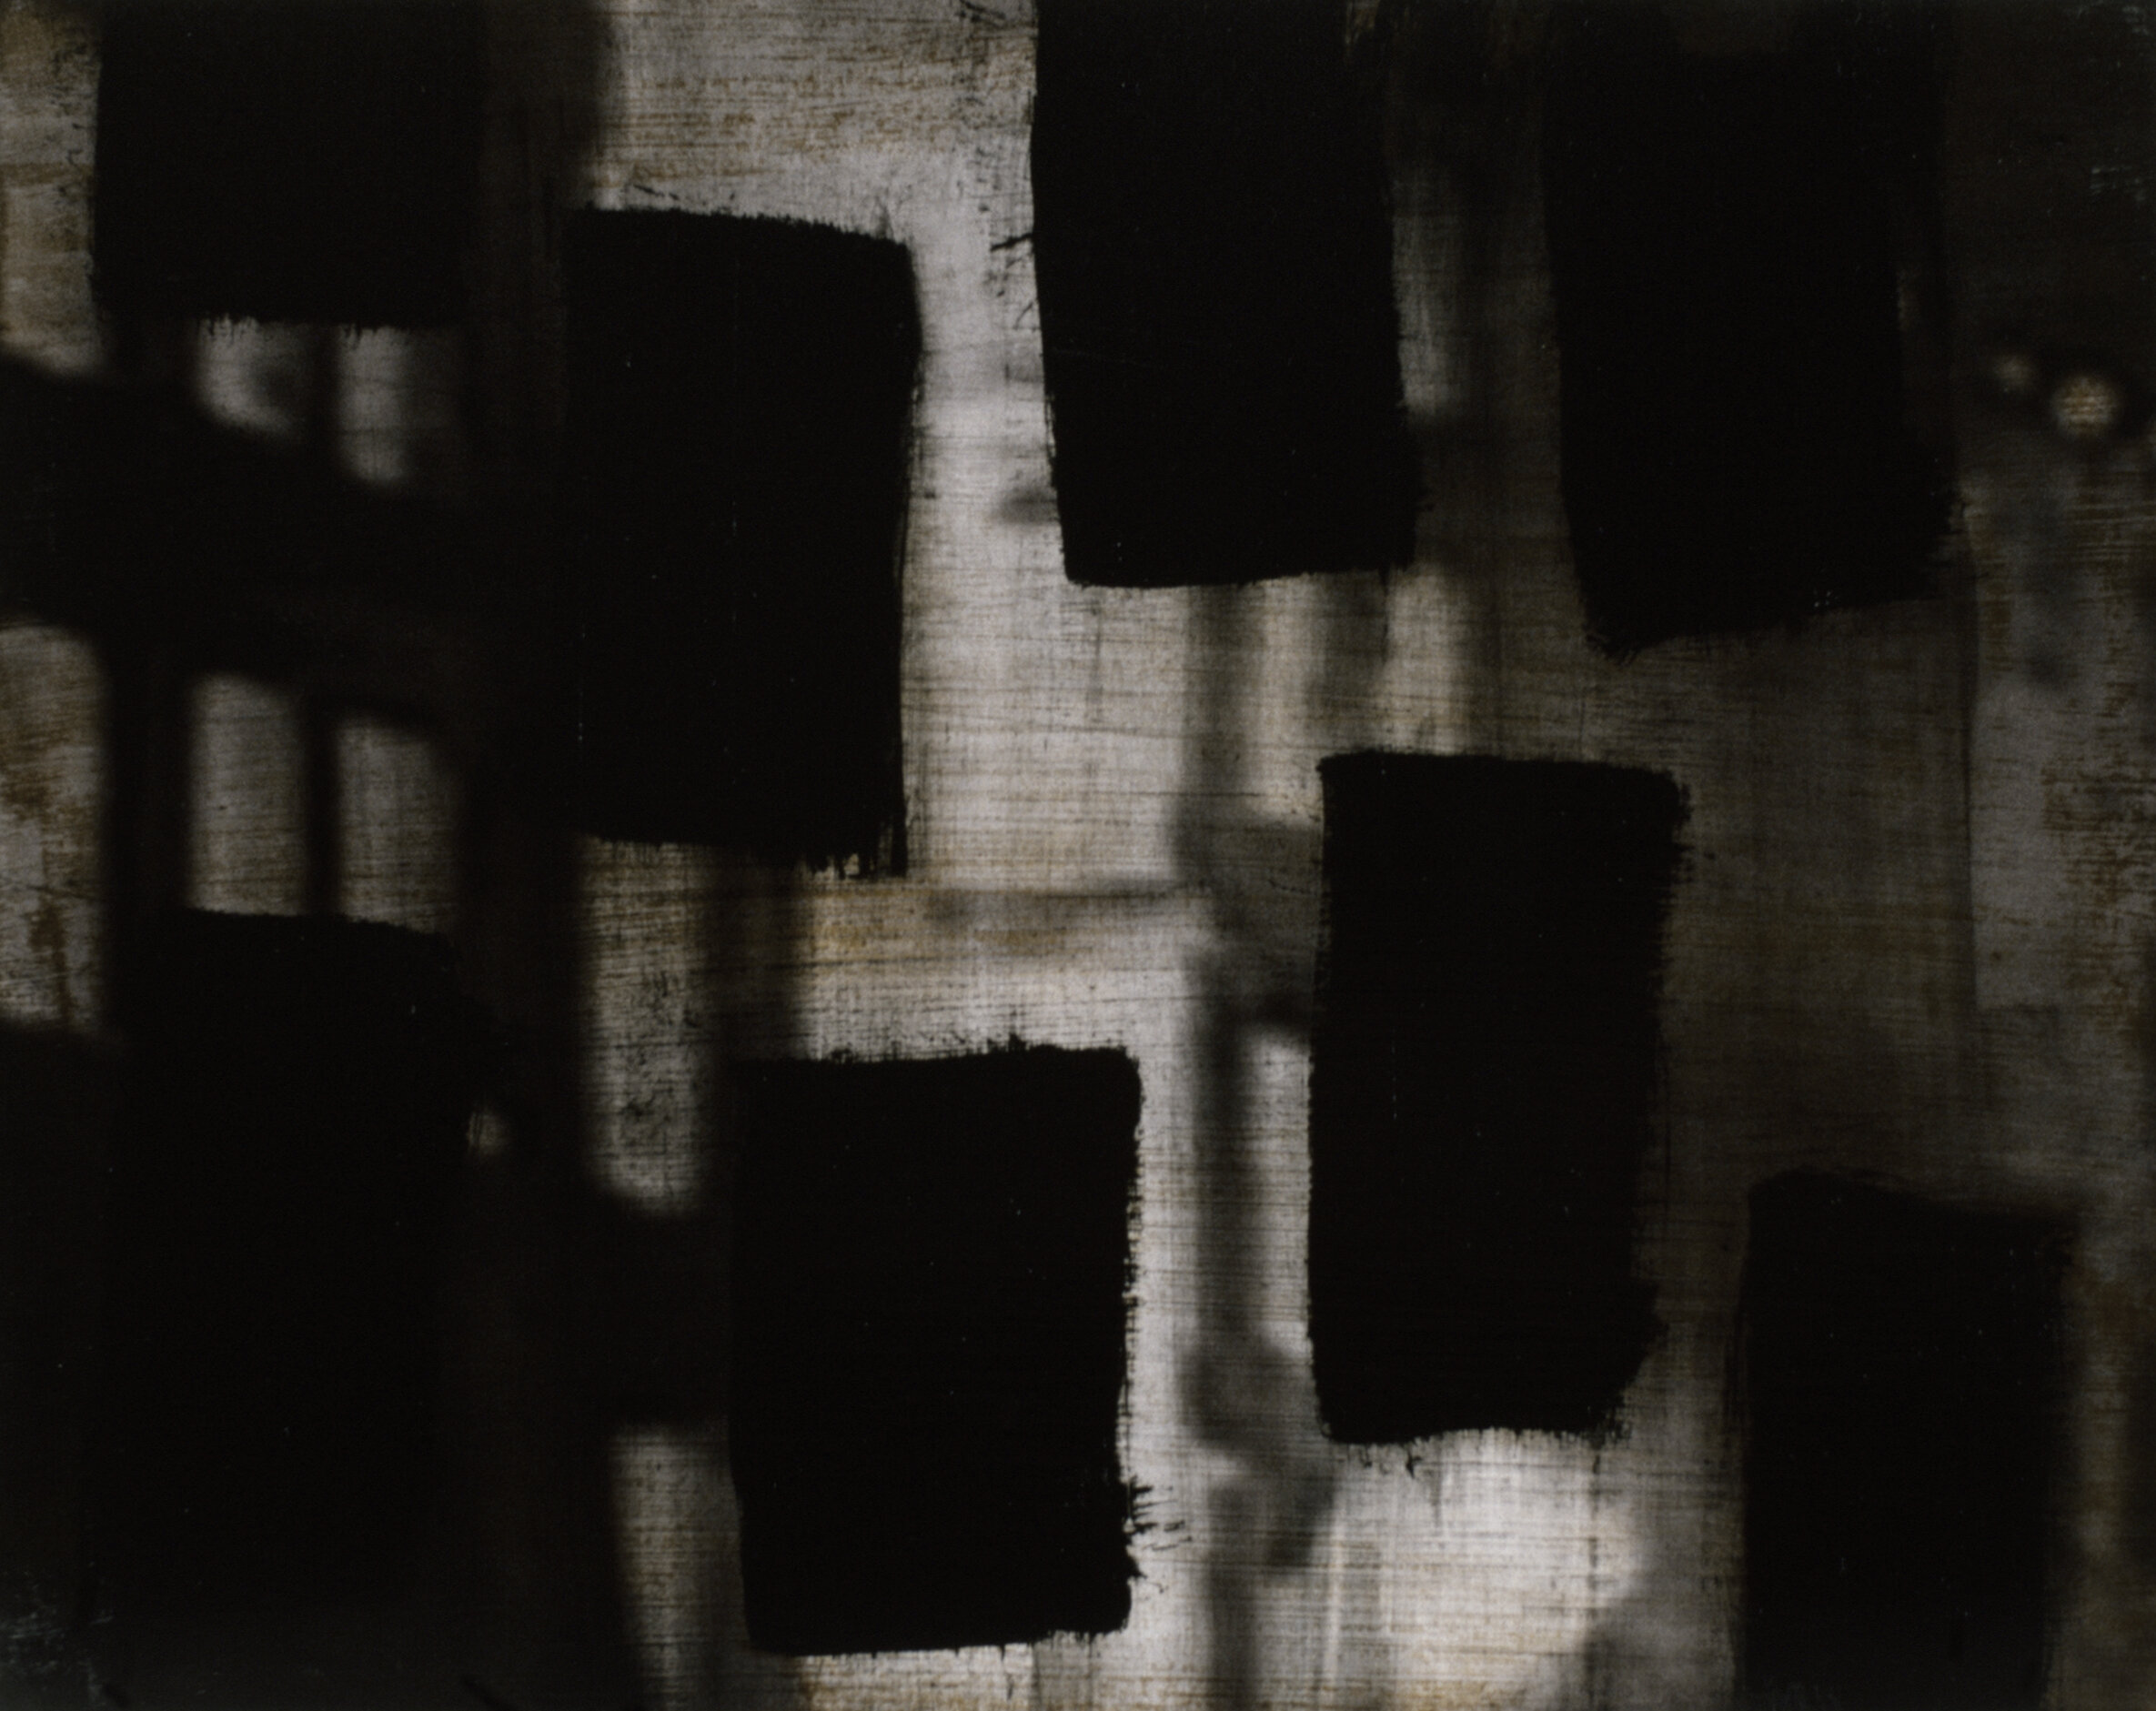   Untitled 18.P5       2002  Digital Image , Oil, Paper on Panel      8” x 10”   